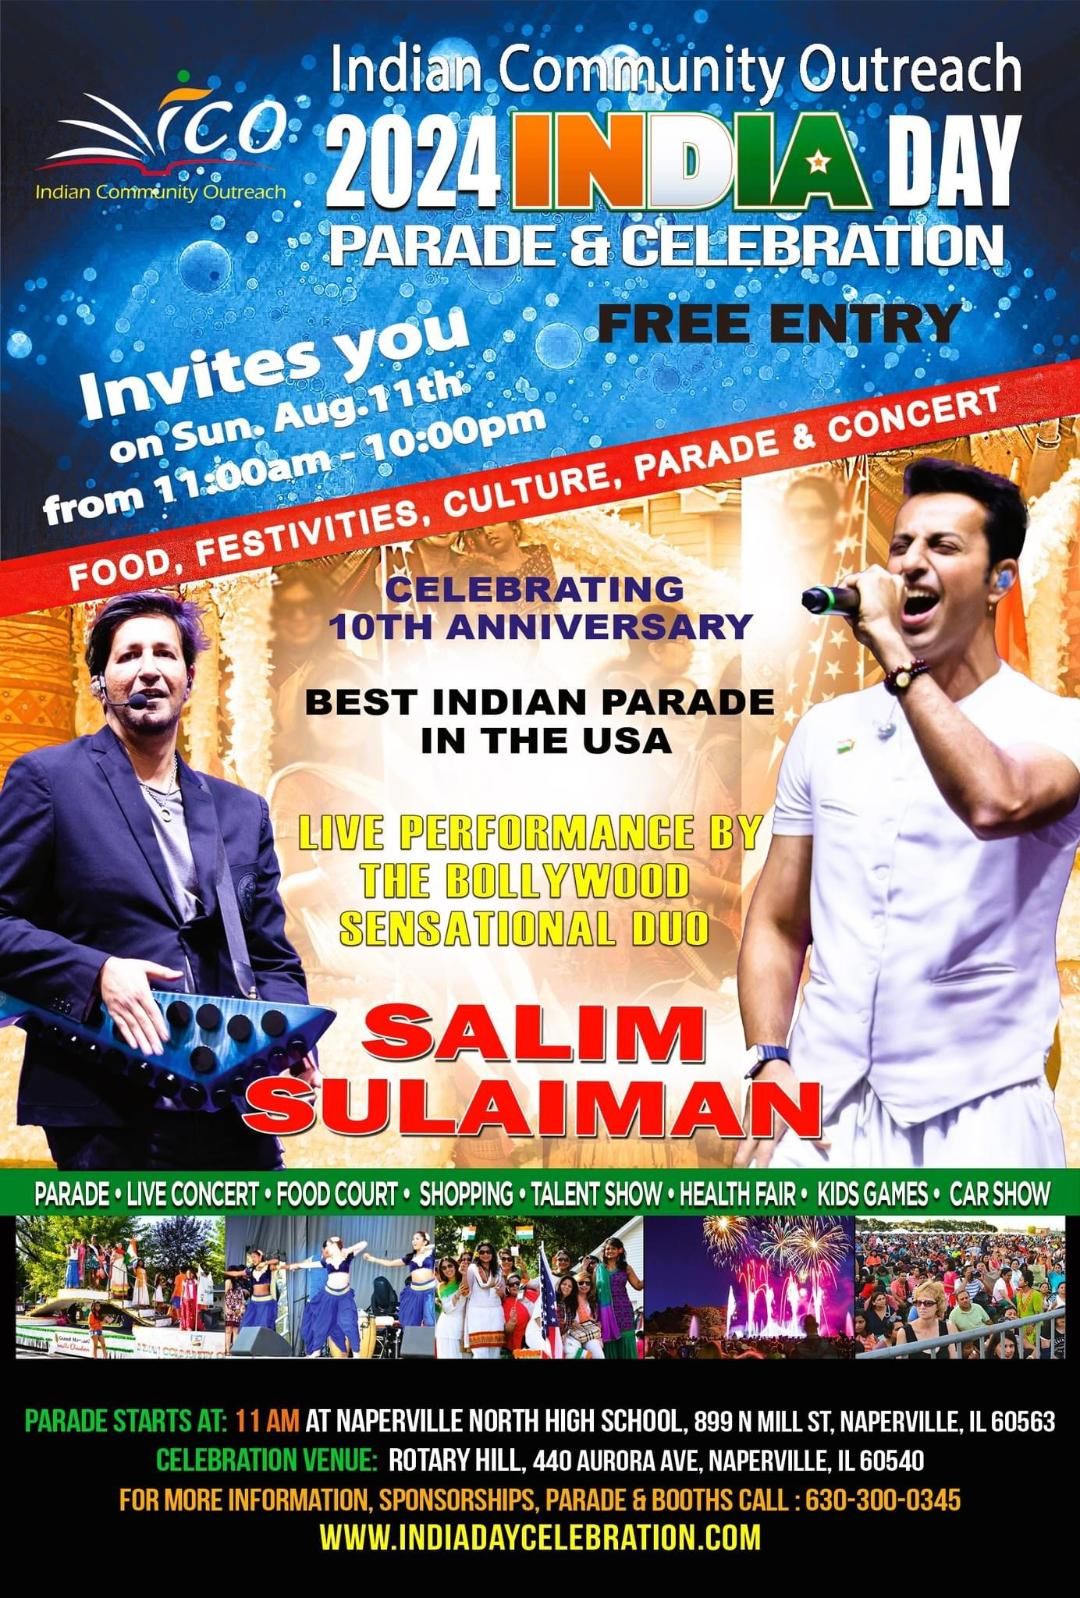 India Day Parade & Salim Sulaiman Concert free entry